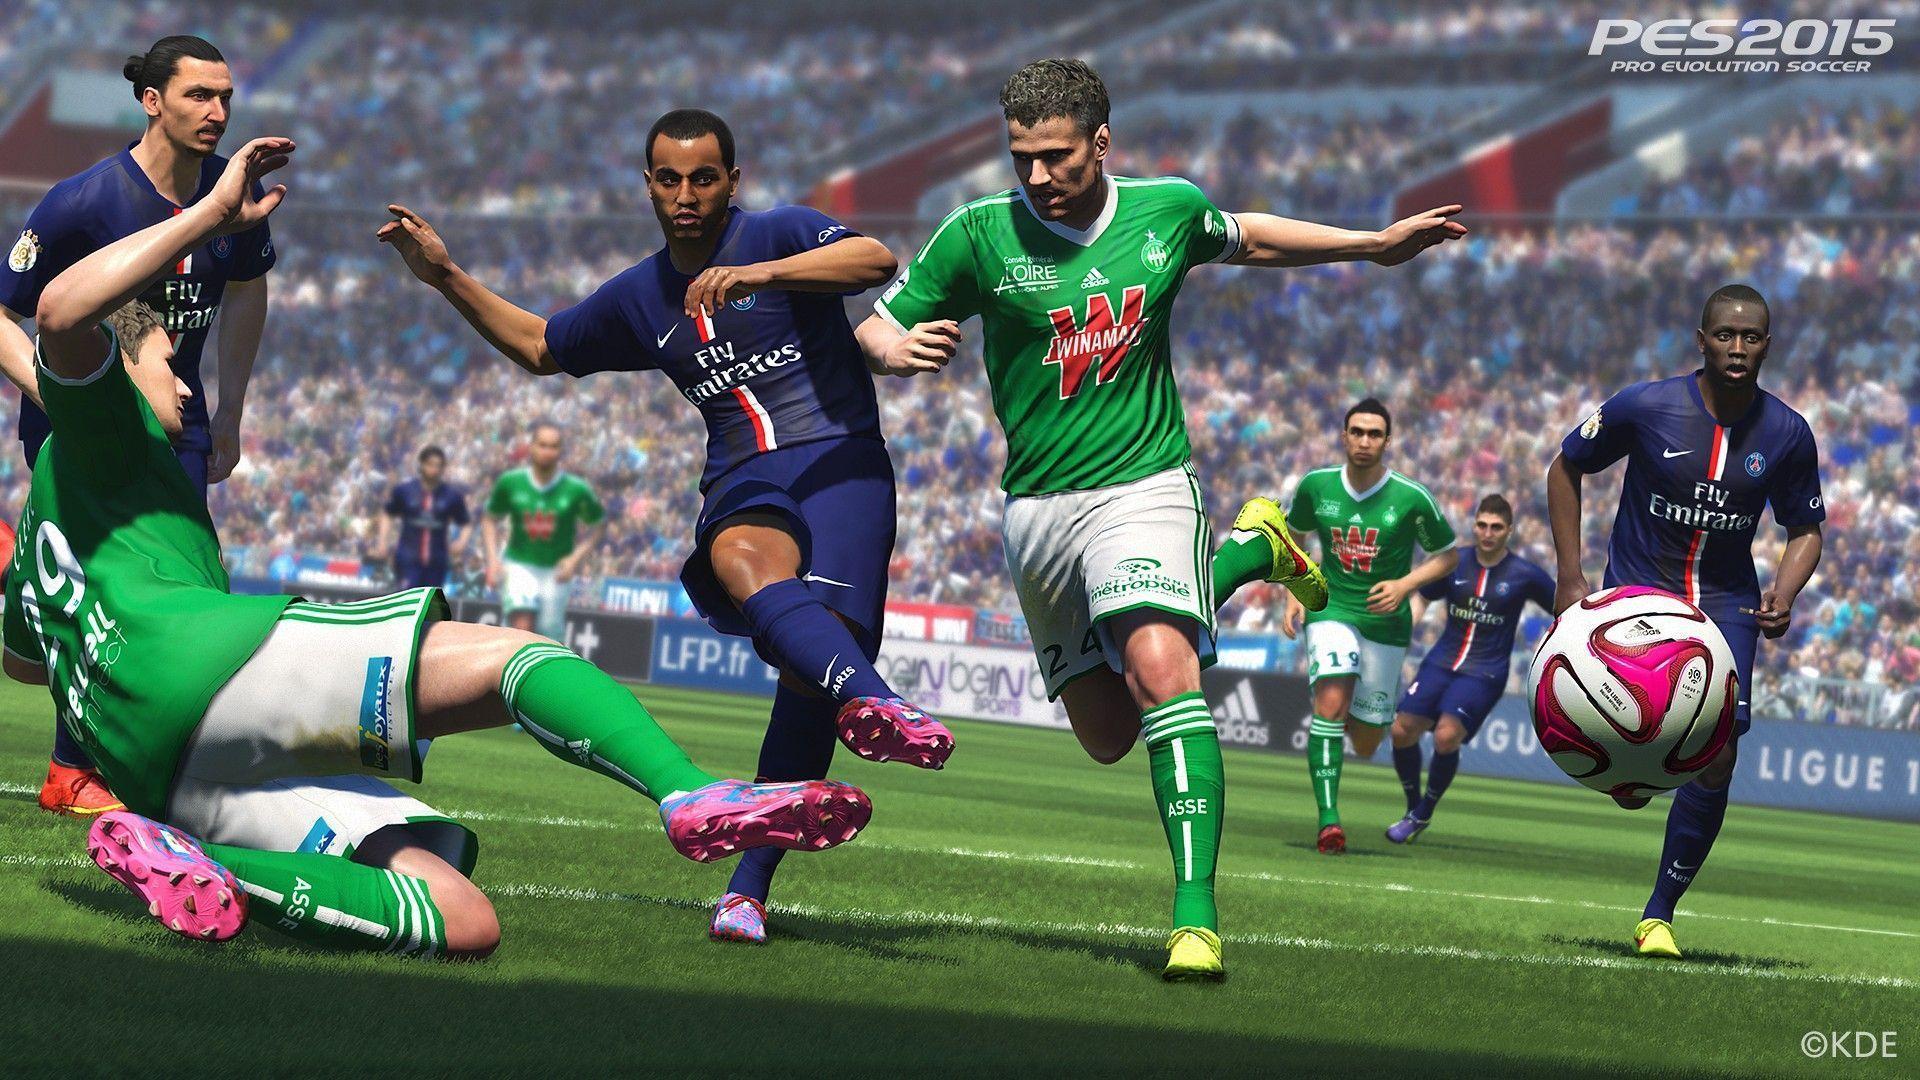 REVIEW: Pro Evolution Soccer 2015 Return Of The King? Balls.ie